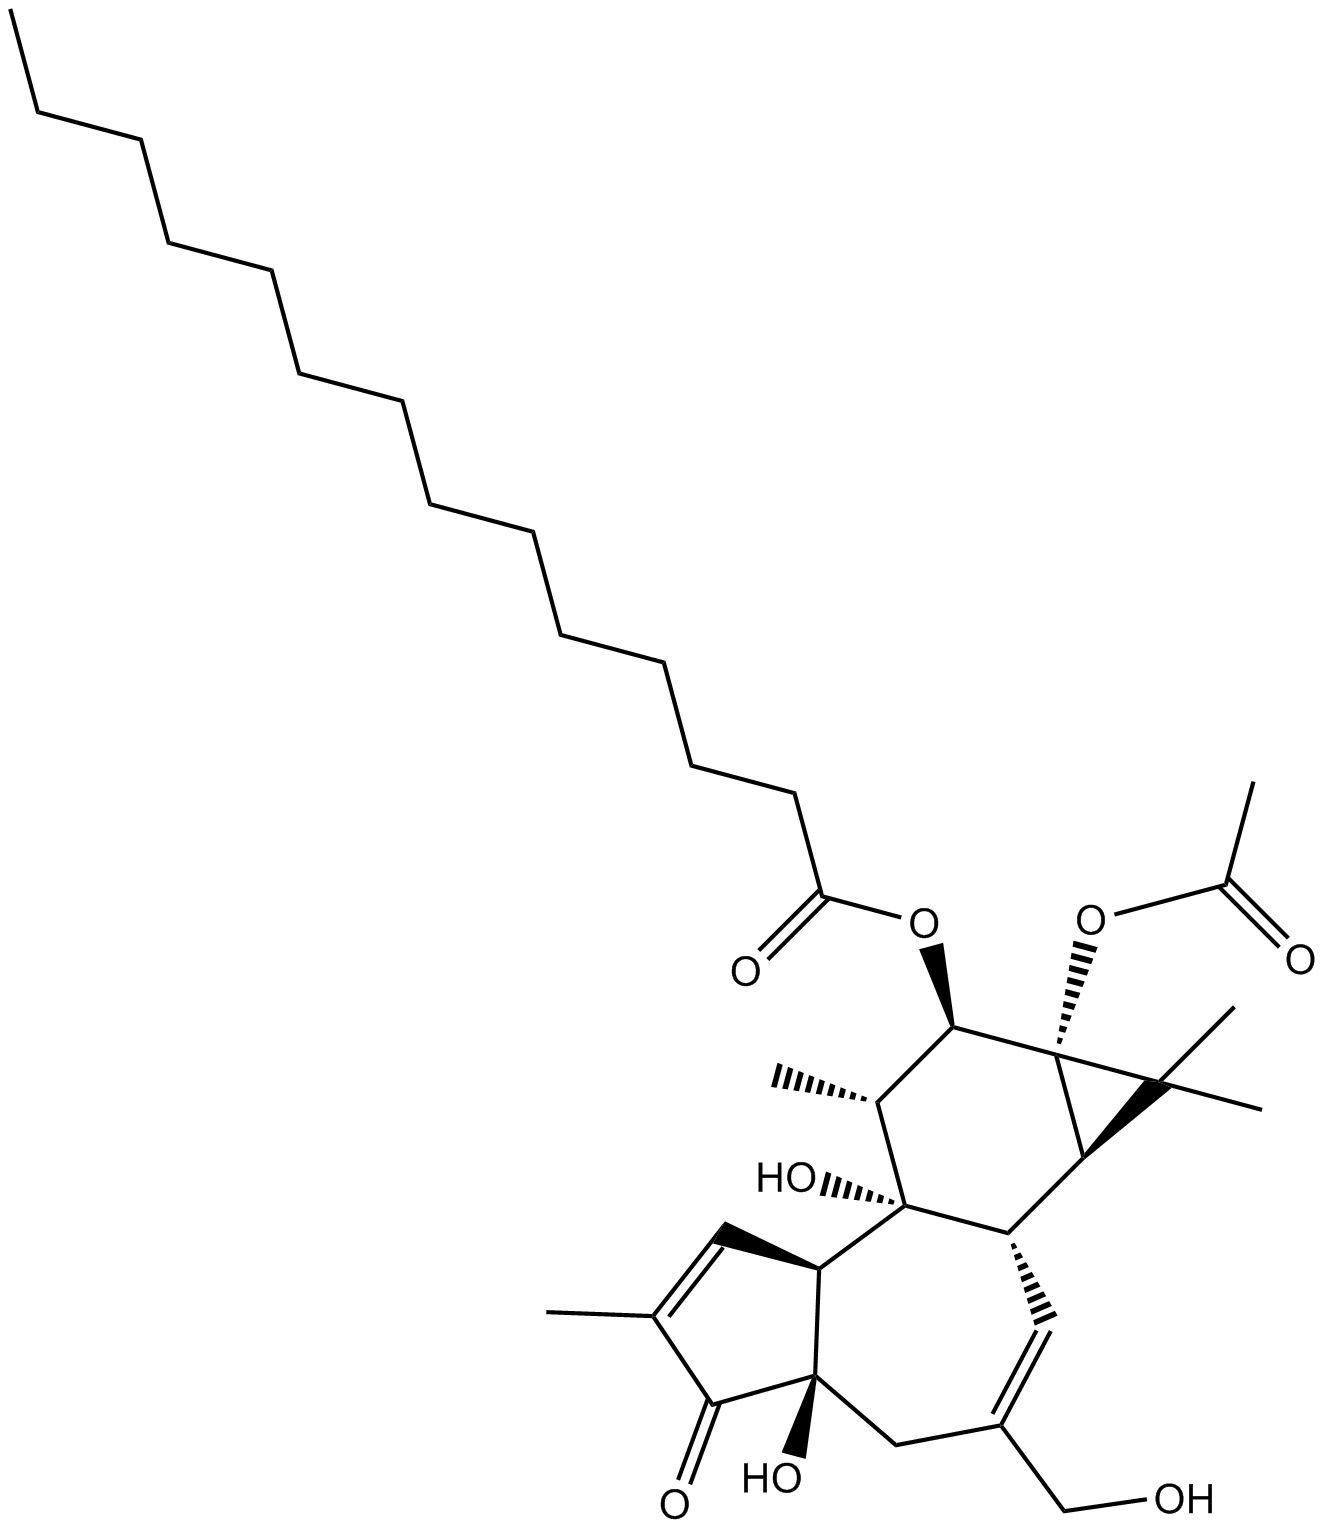 12-O-tetradecanoyl phorbol-13-acetate  Chemical Structure